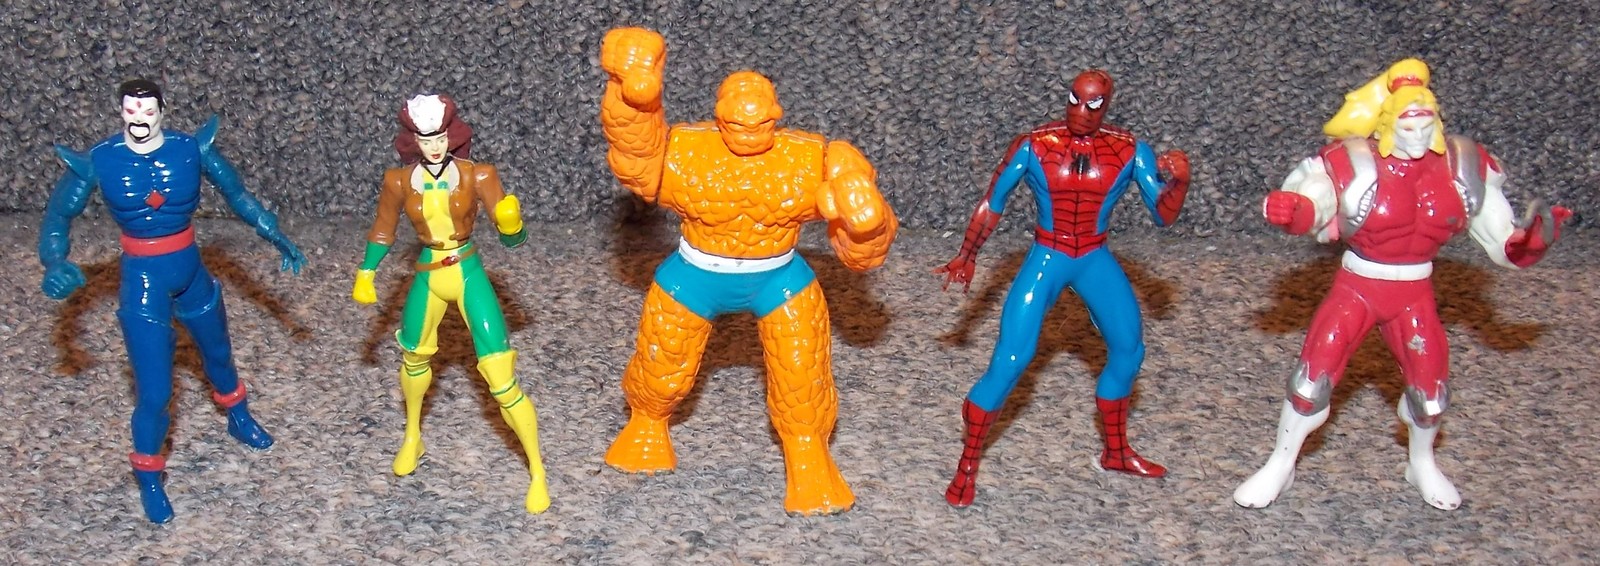 1994 Marvel Die Cast Metal Lot of 5 Figures Spiderman Thing Rogue & More - $29.99